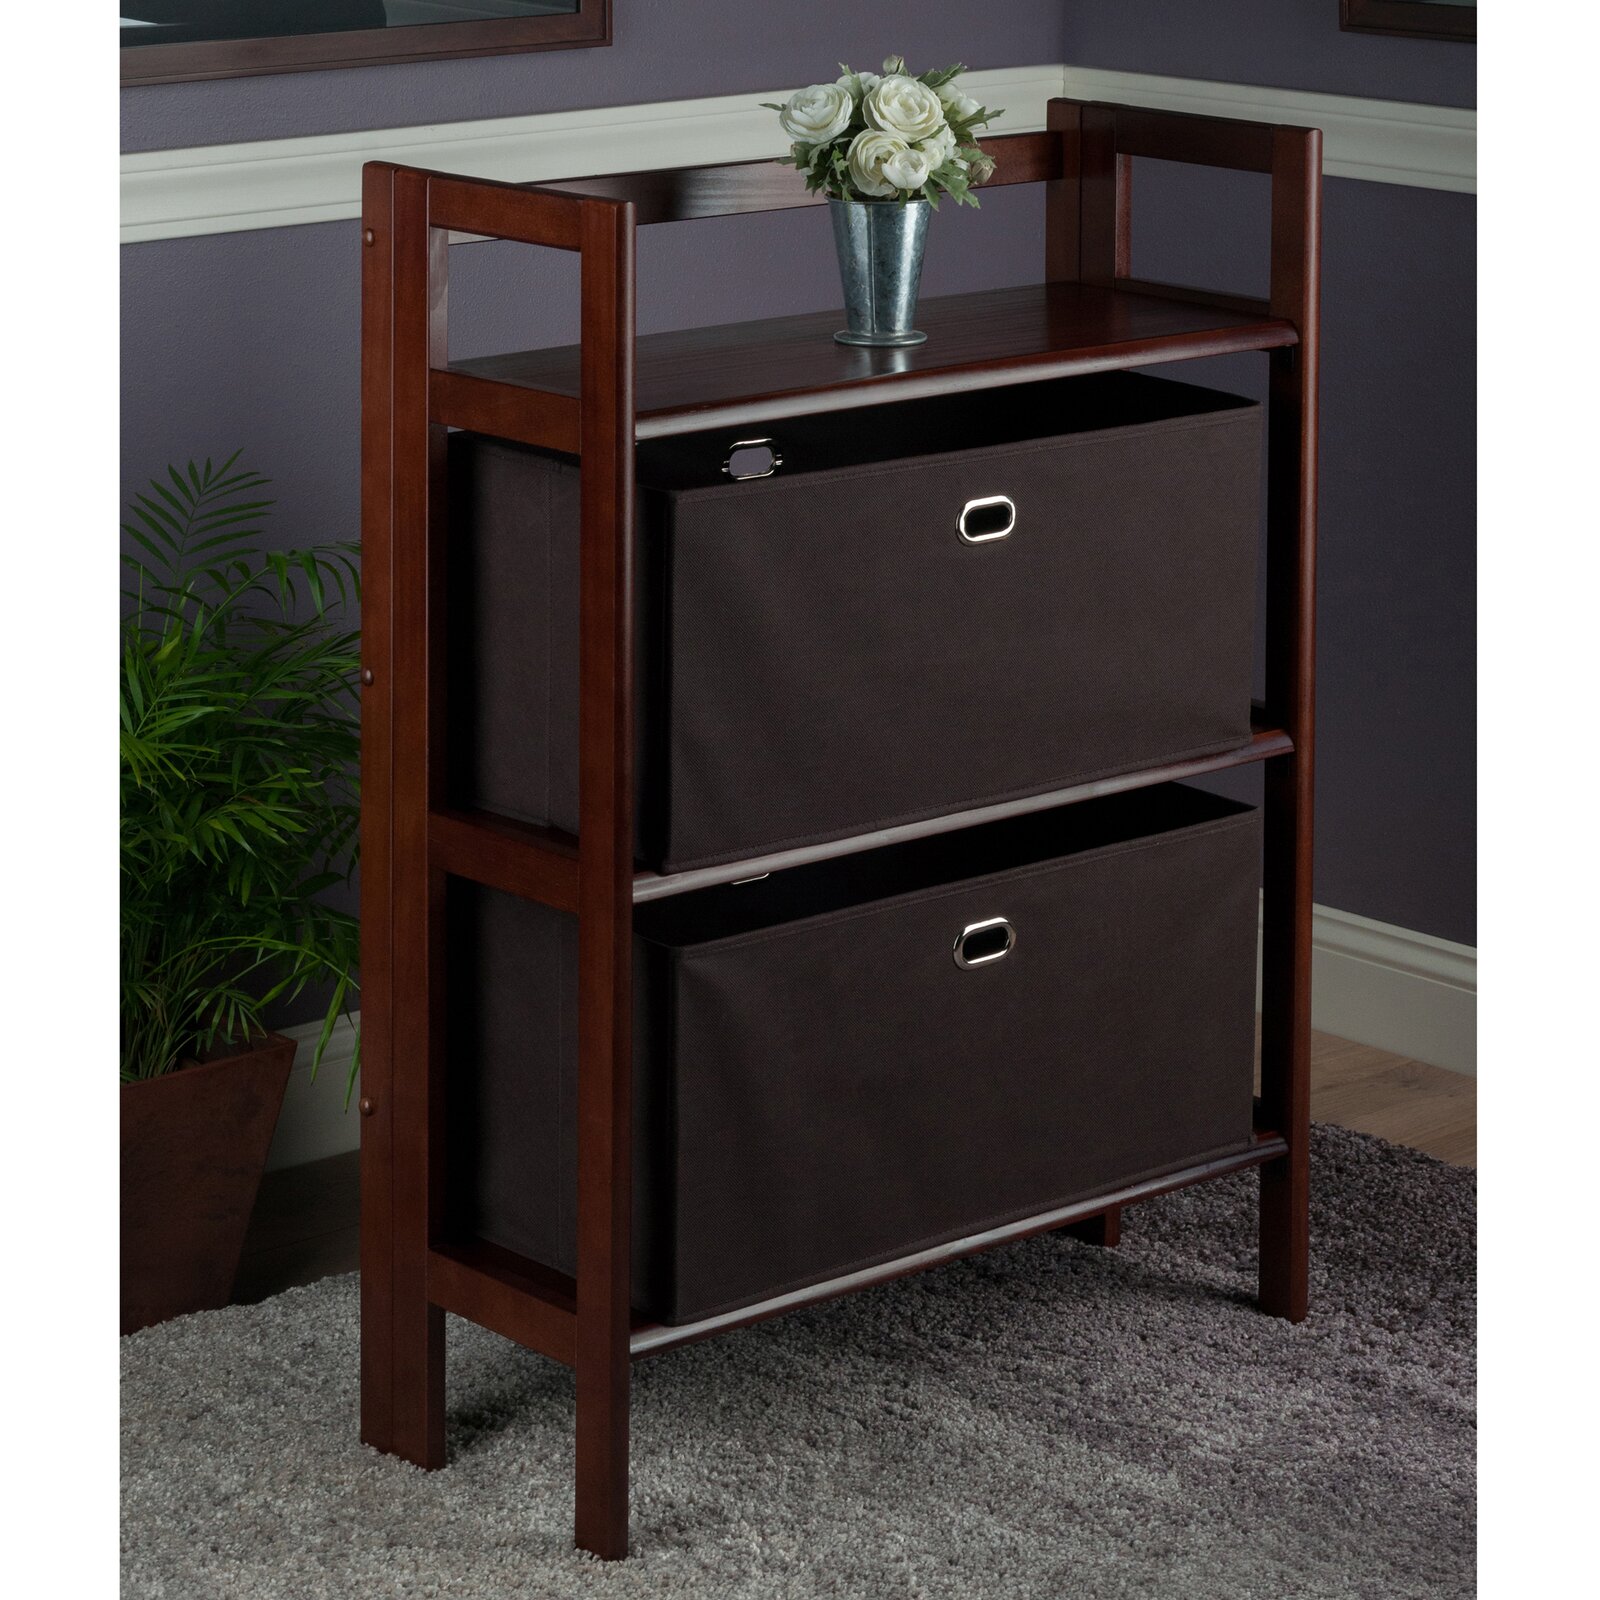 Ebern Designs Arlowe 38.54'' H x 27.8'' W Solid Wood Etagere Bookcase with Bins